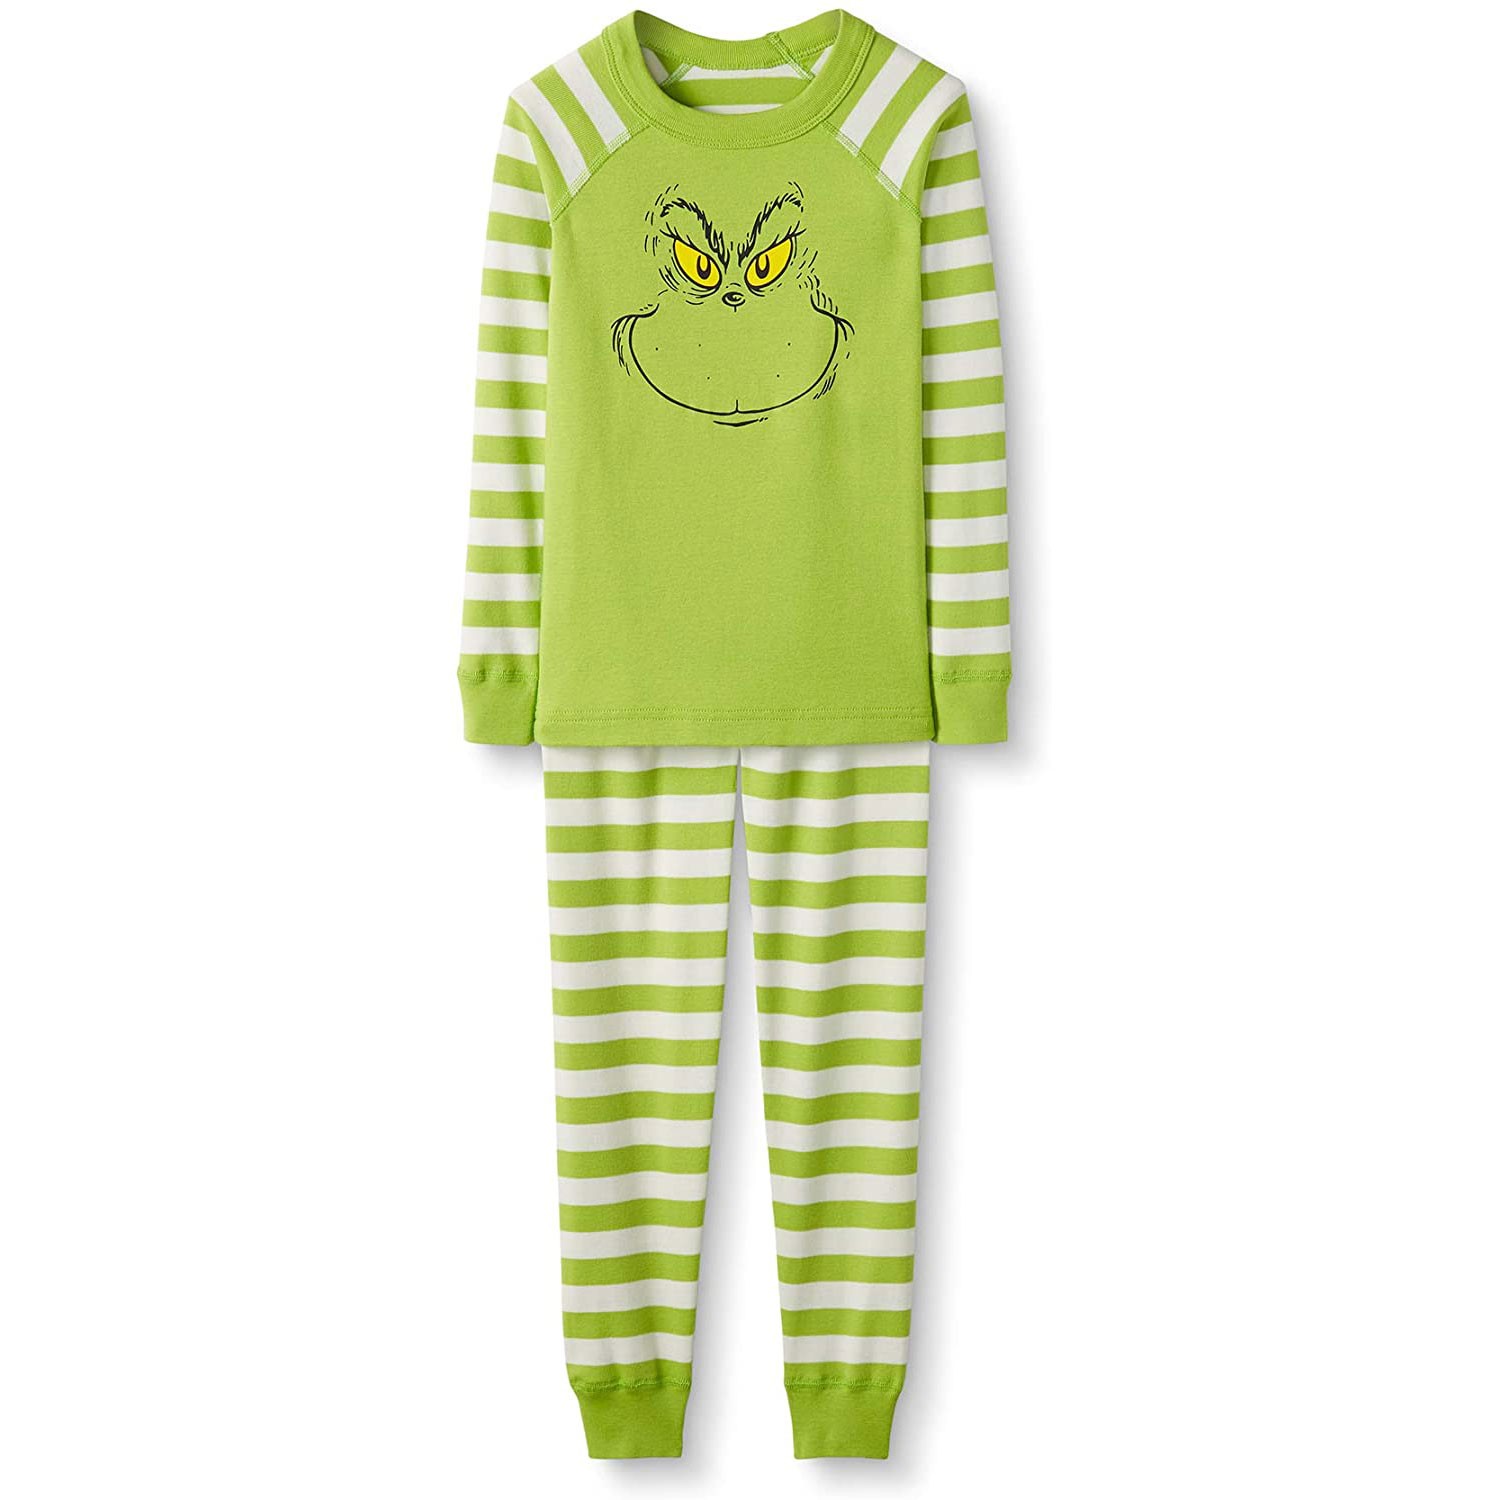 Order Cartoon Pajamas For Adults & Kids On SALE!